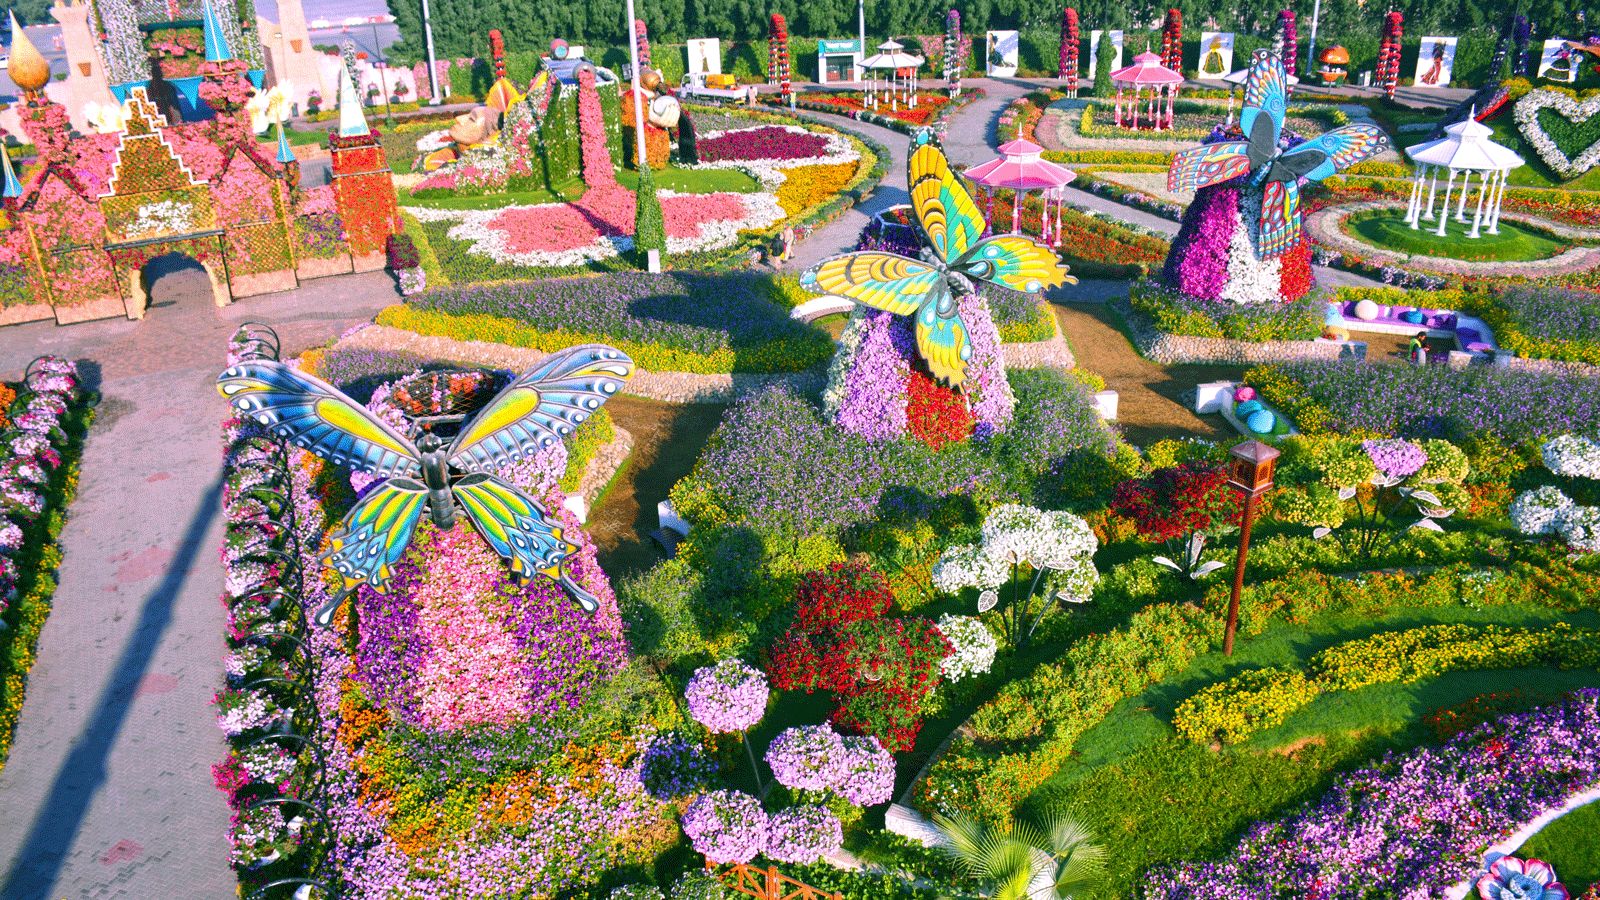 Dubai Miracle Garden: World's largest flower garden | CNN